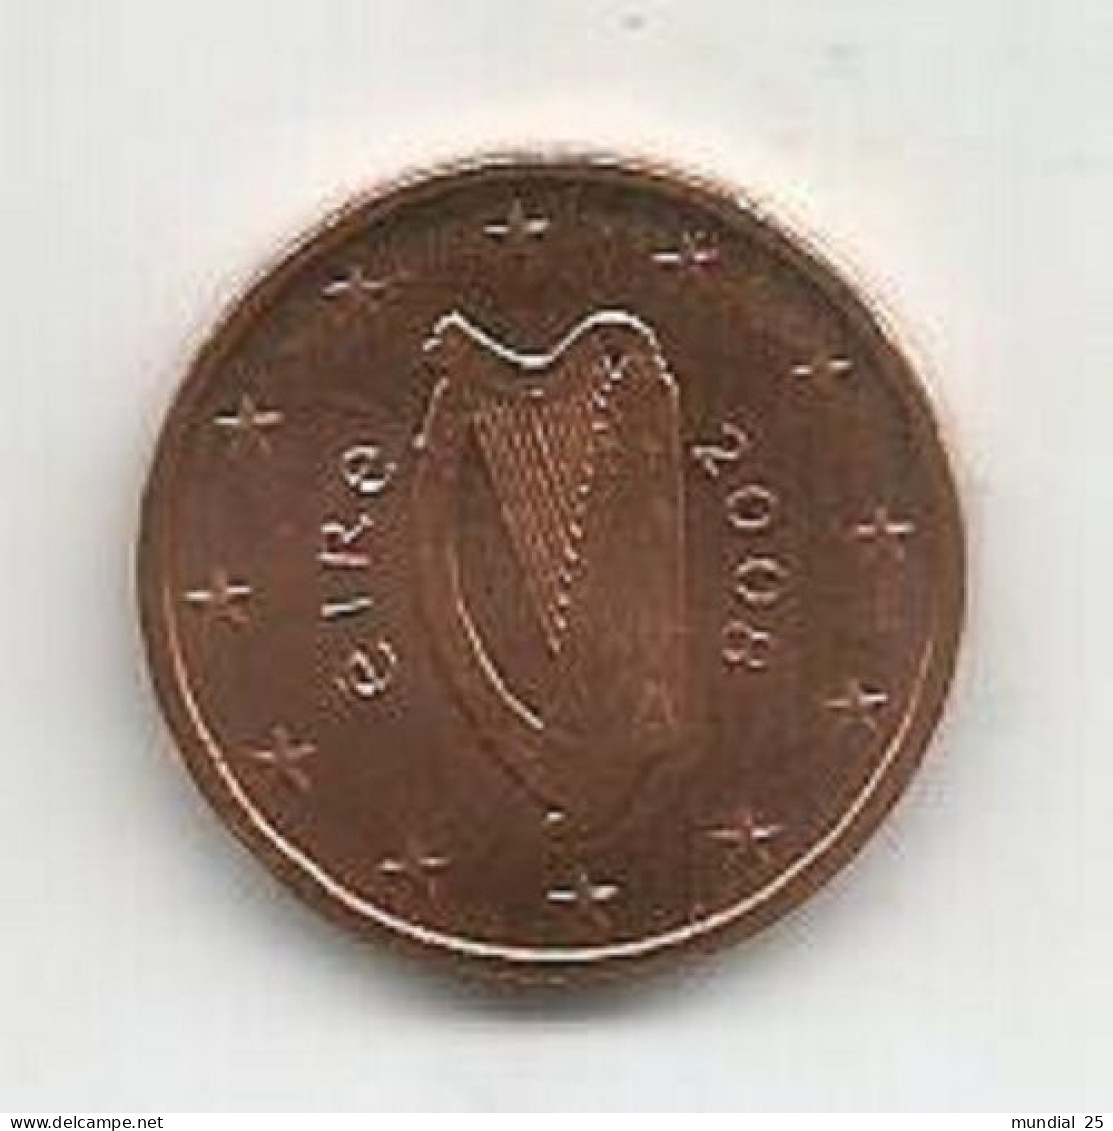 IRELAND 2 EURO CENT 2008 - Ireland